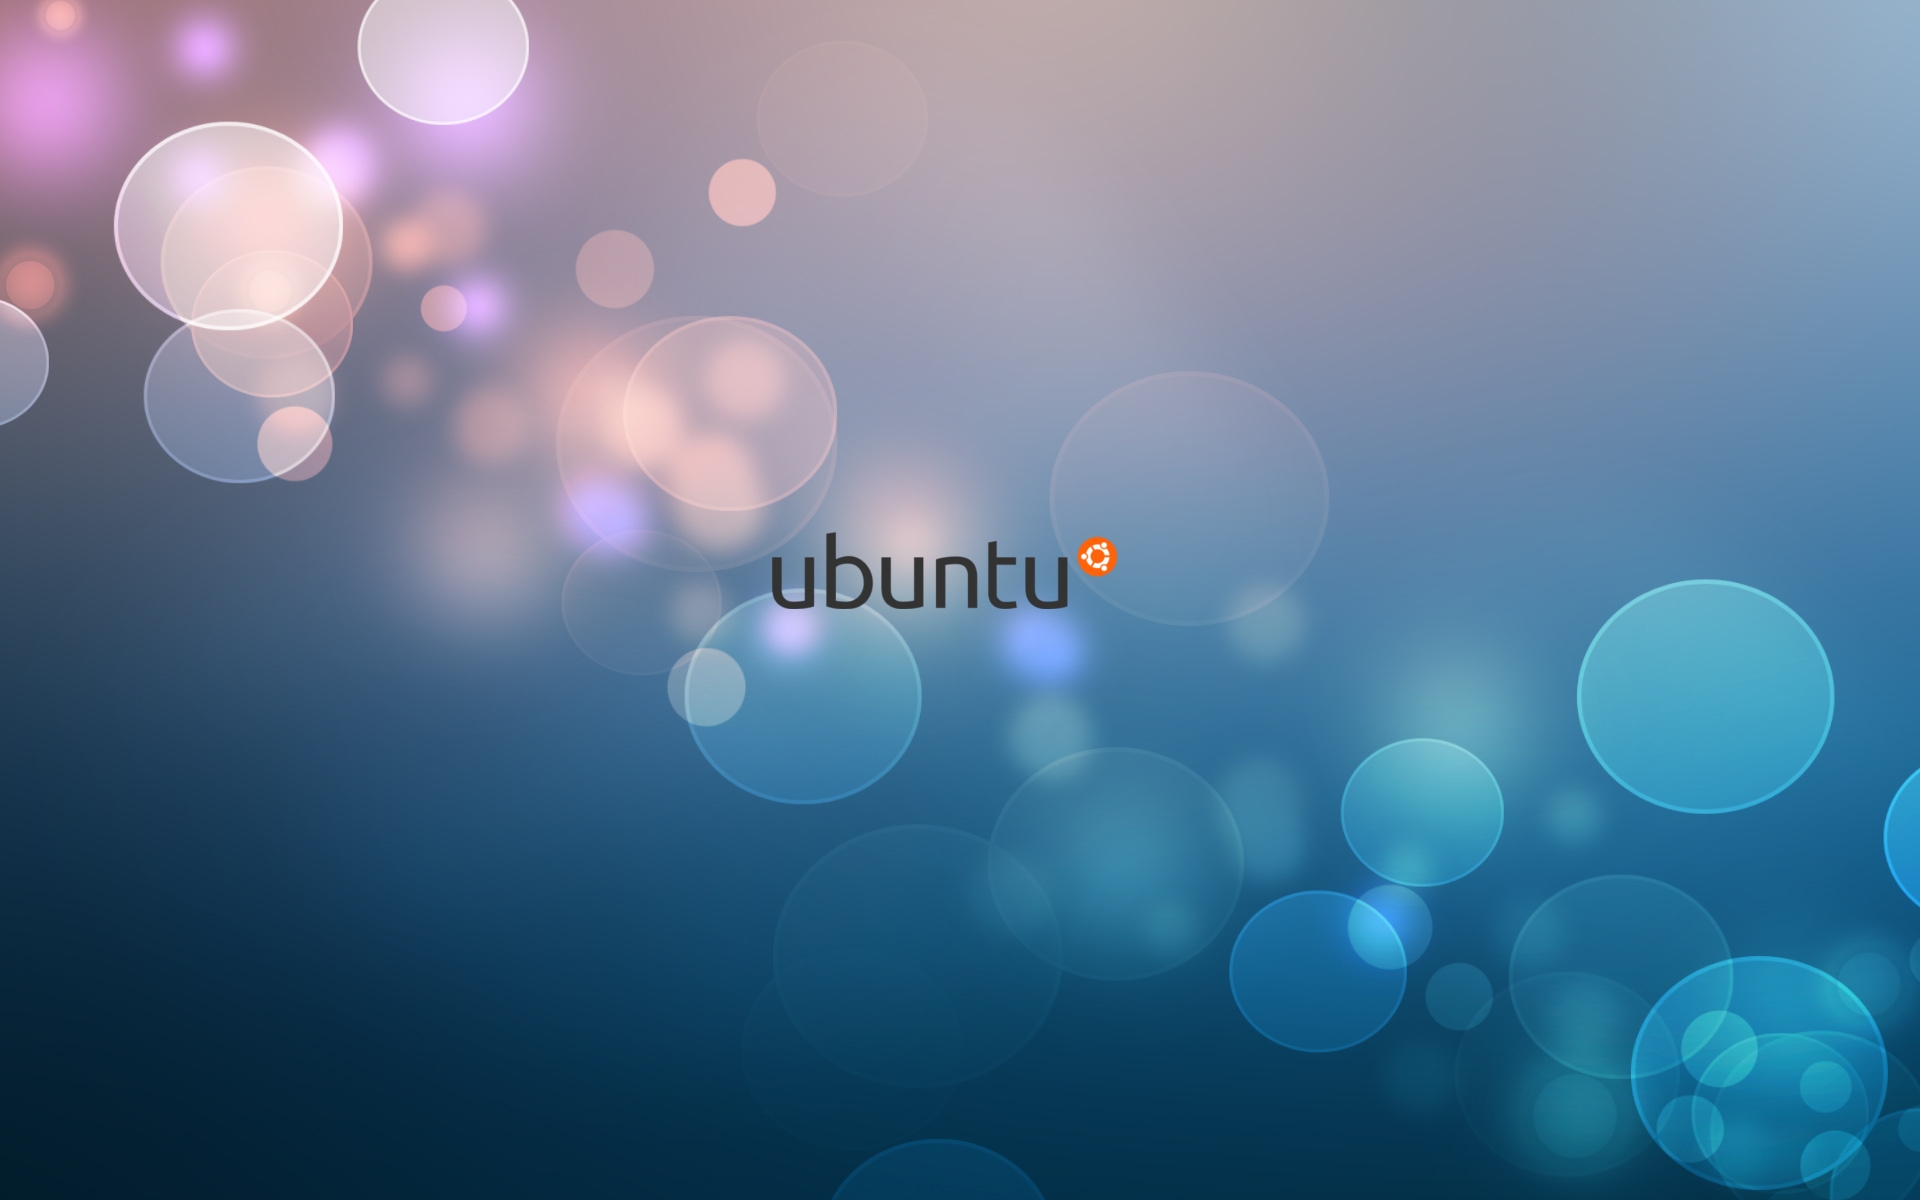 Ubuntu Minimalistic for 1920 x 1200 widescreen resolution